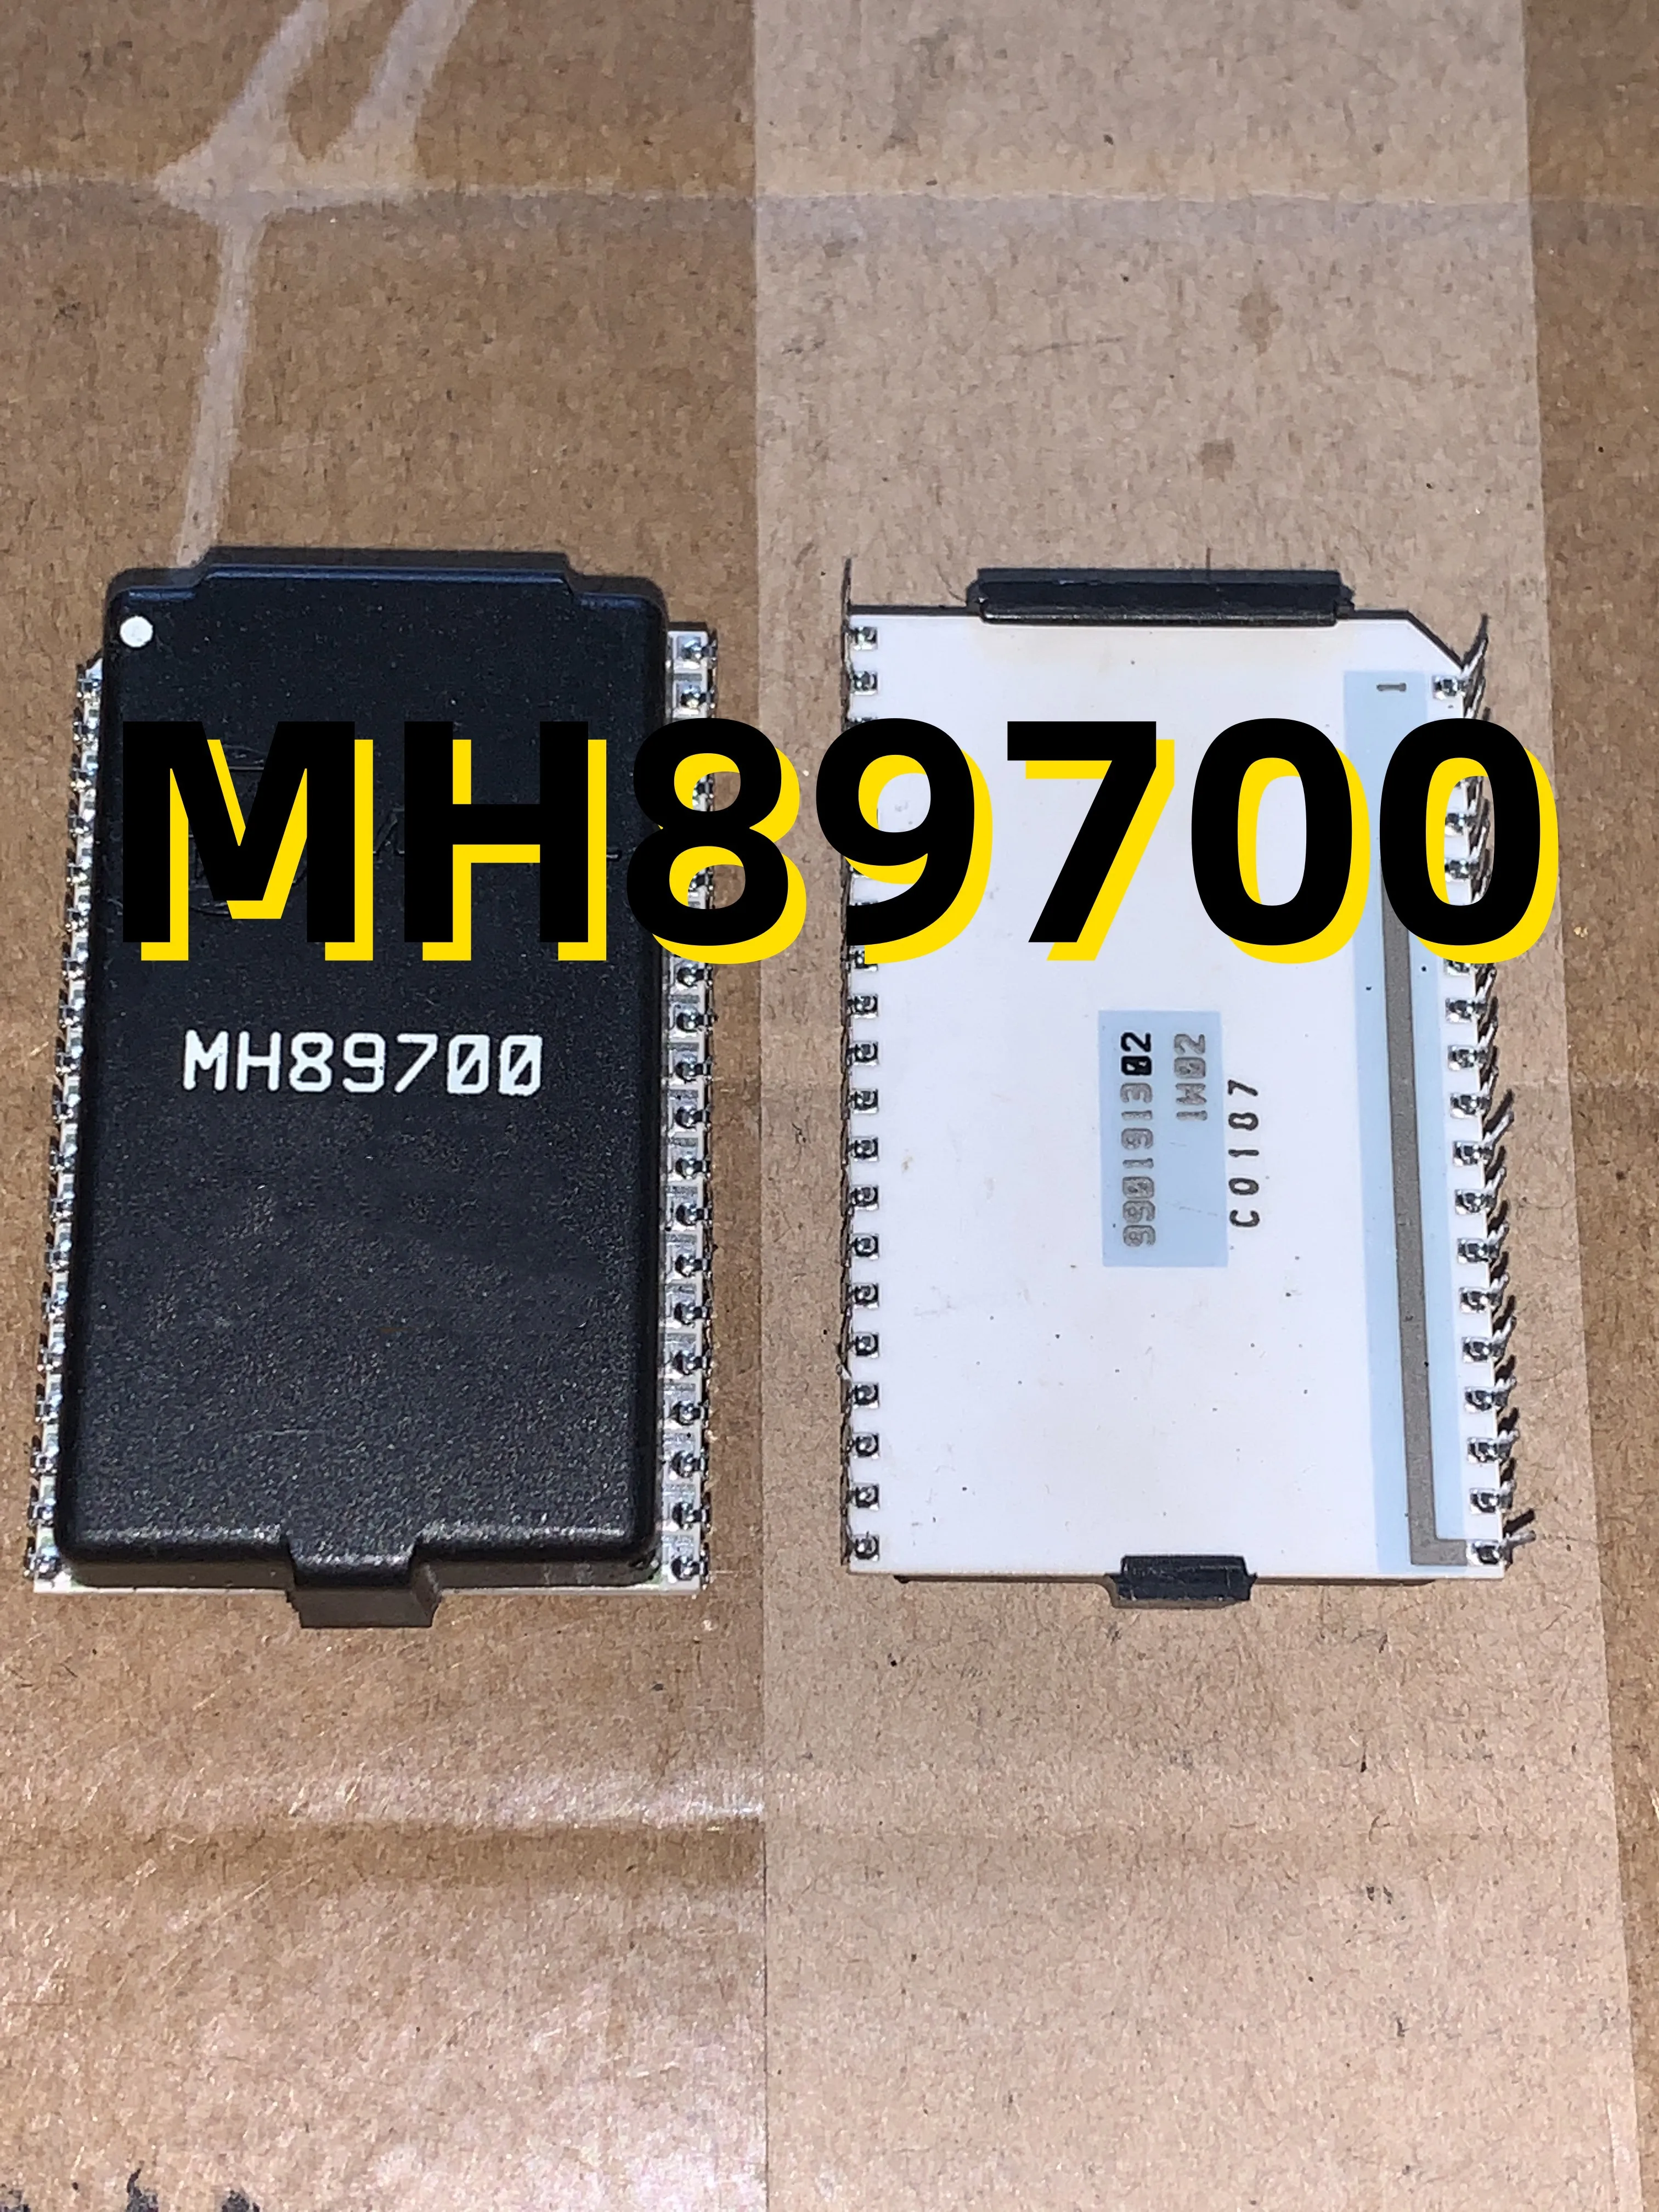 

MH89700